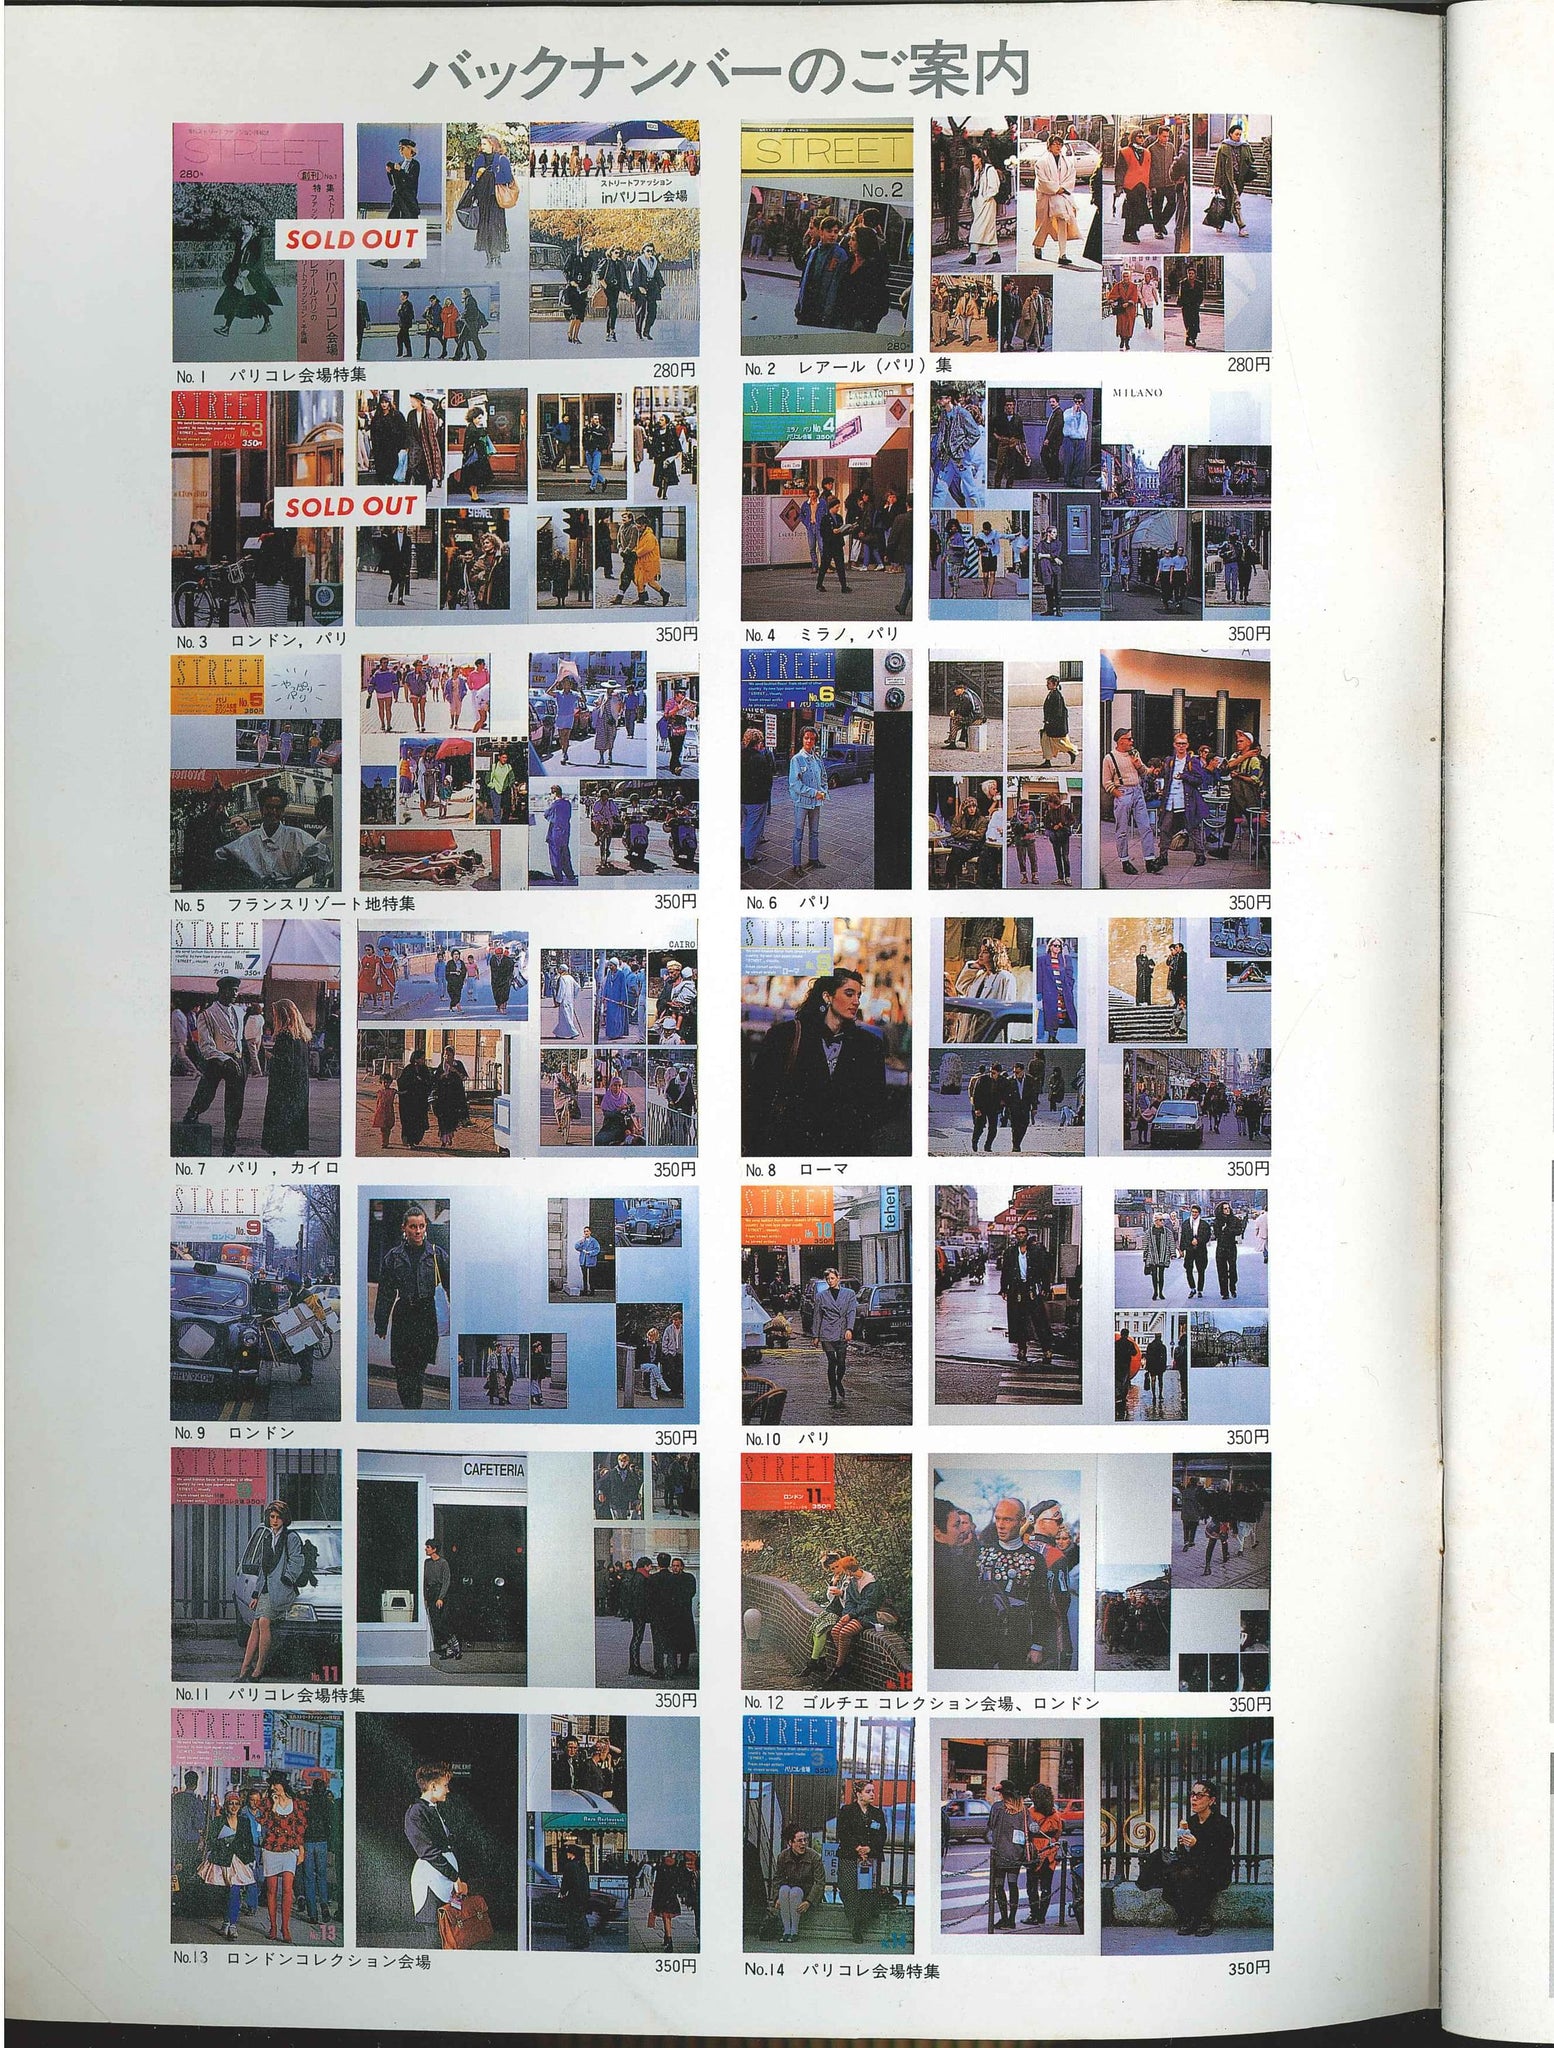 STREET magazine no. 15 / may 1988 / street fashion in london / Shoichi Aoki